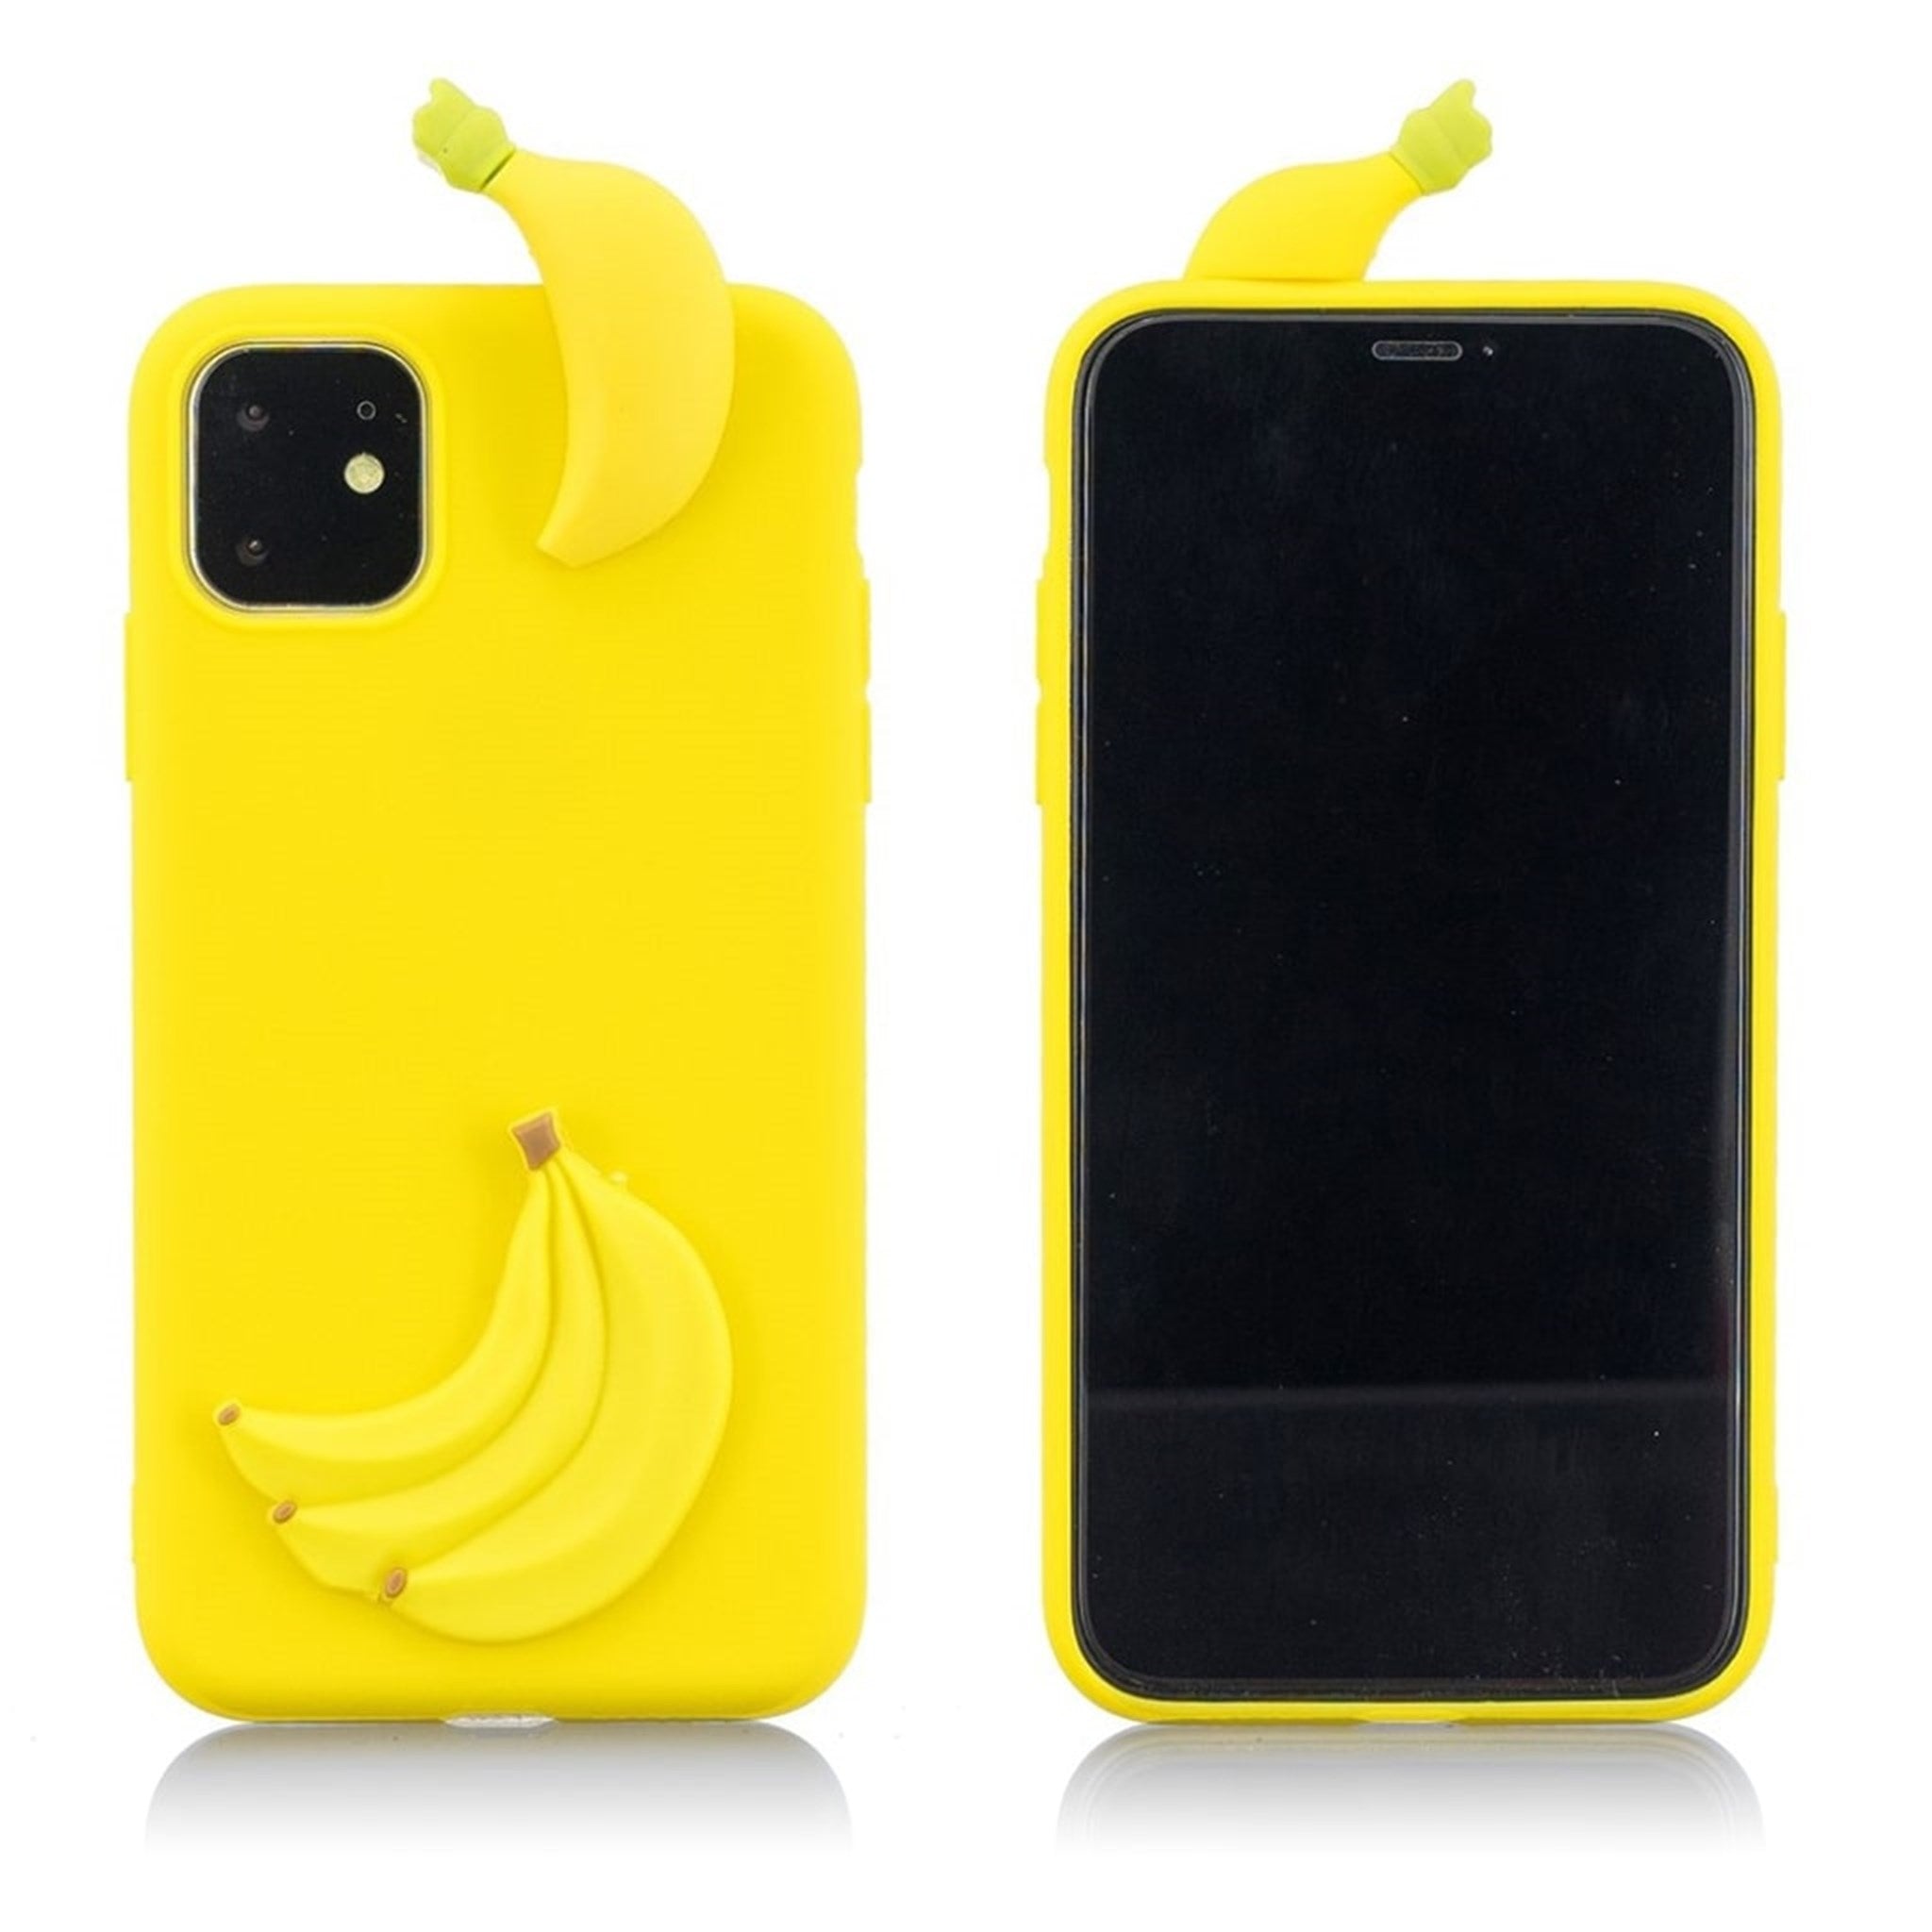 Cute 3D iPhone 11 Pro Max case - Banana